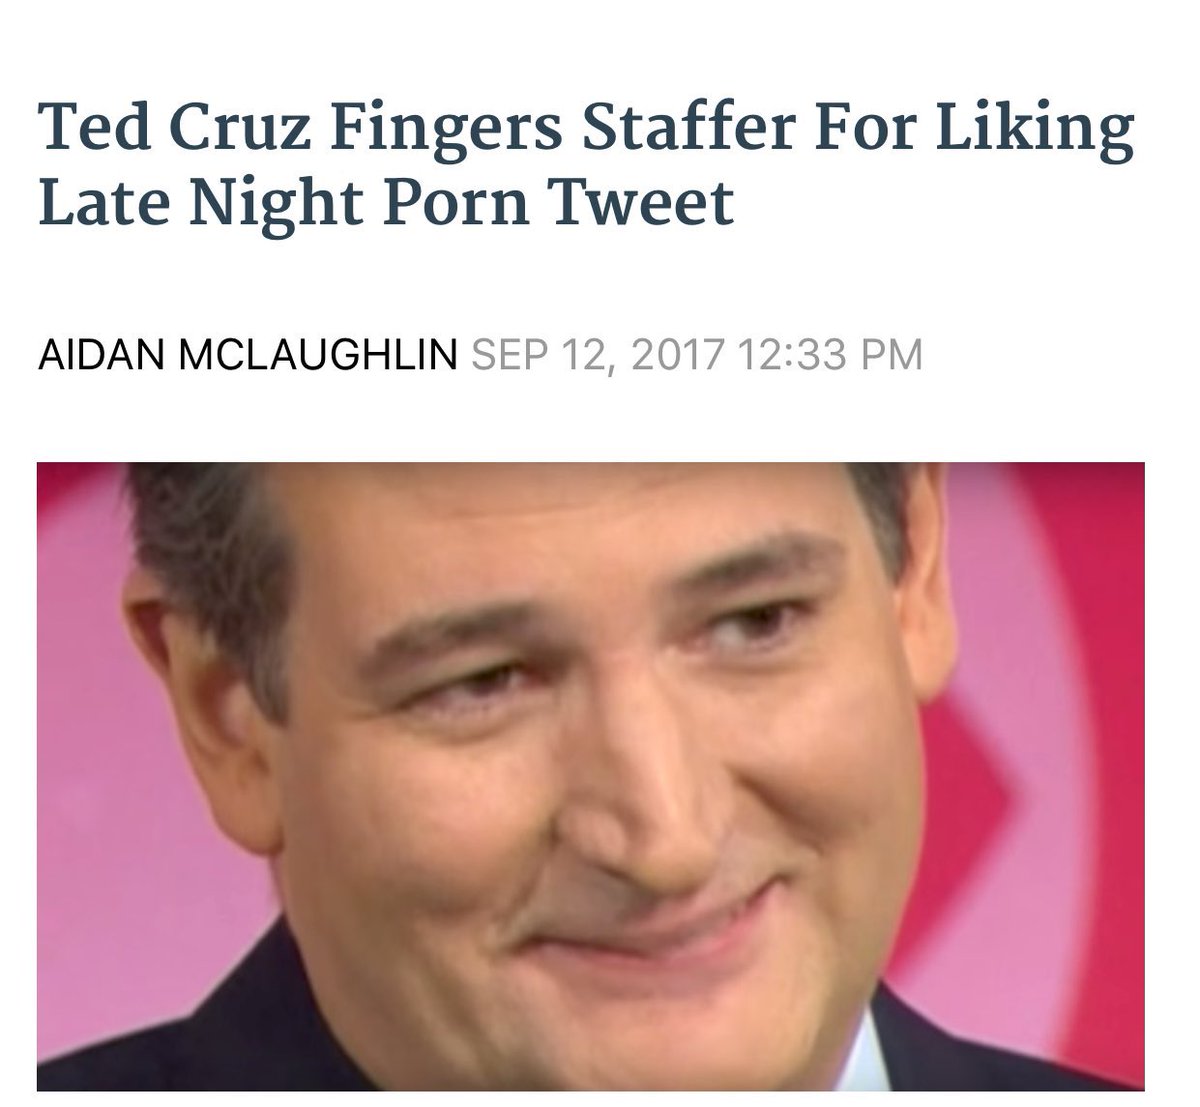 Ted cruz fingers staffer for liking late night porn tweet.